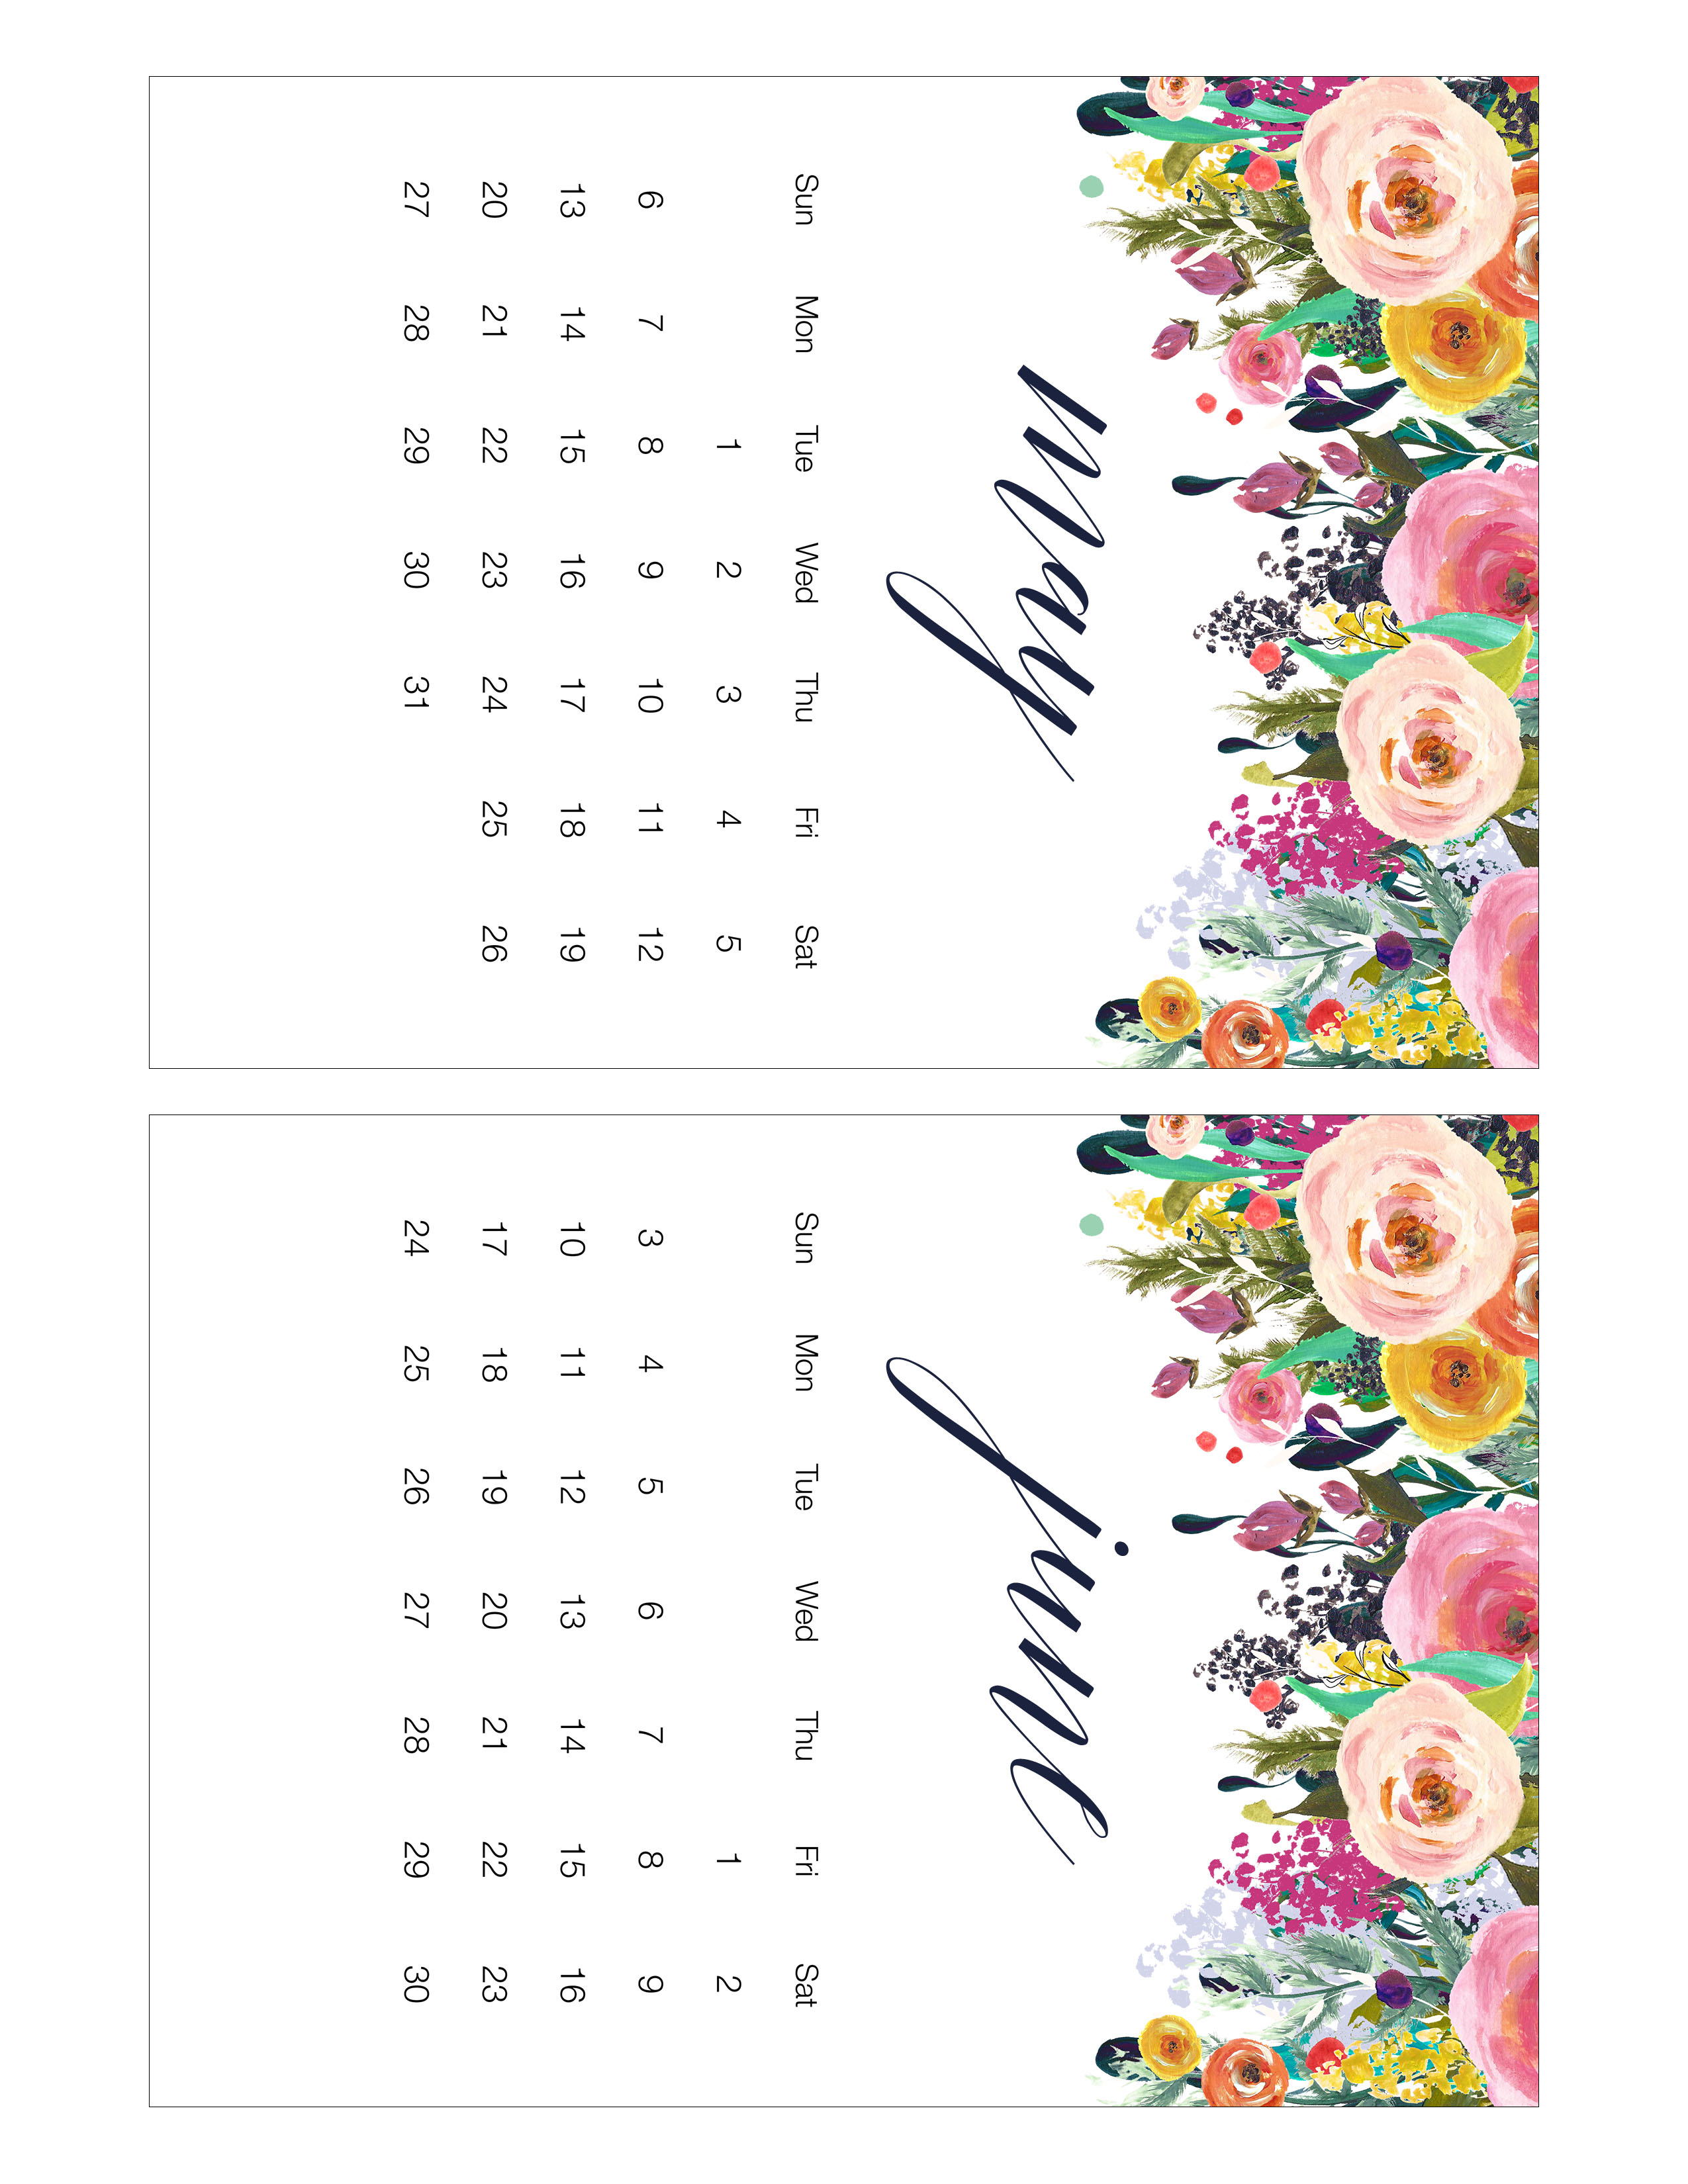 free-printable-2018-floral-5x7-calendar-the-cottage-market